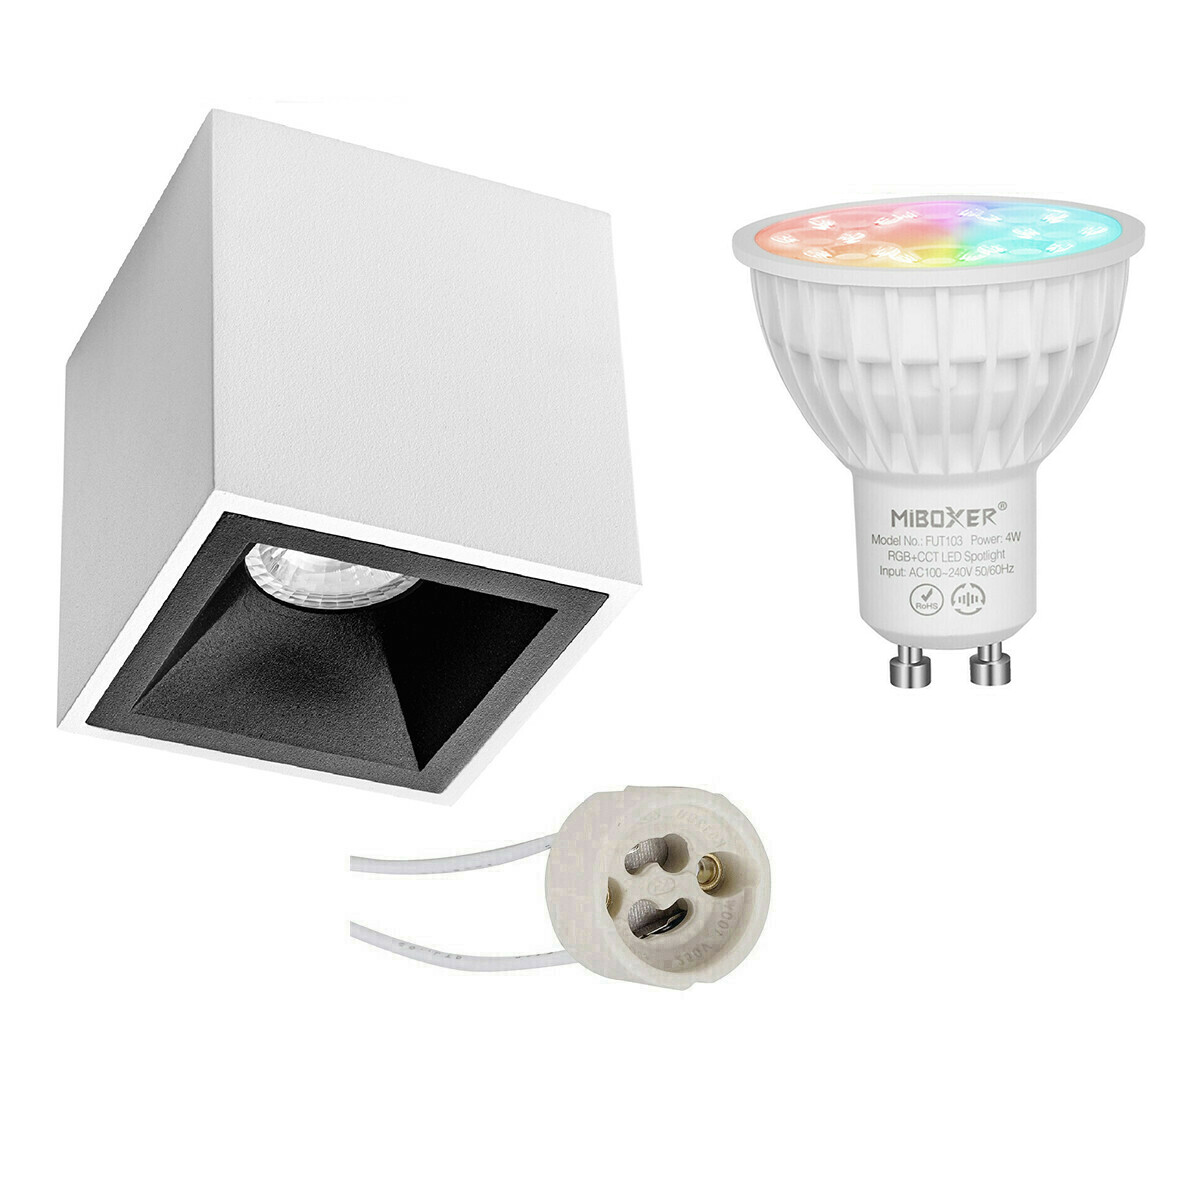 Mi-Light MiBoxer - Opbouwspot Set GU10 - Smart LED - Wifi LED - Slimme LED - 4W - RGB+CCT - Aanpasba